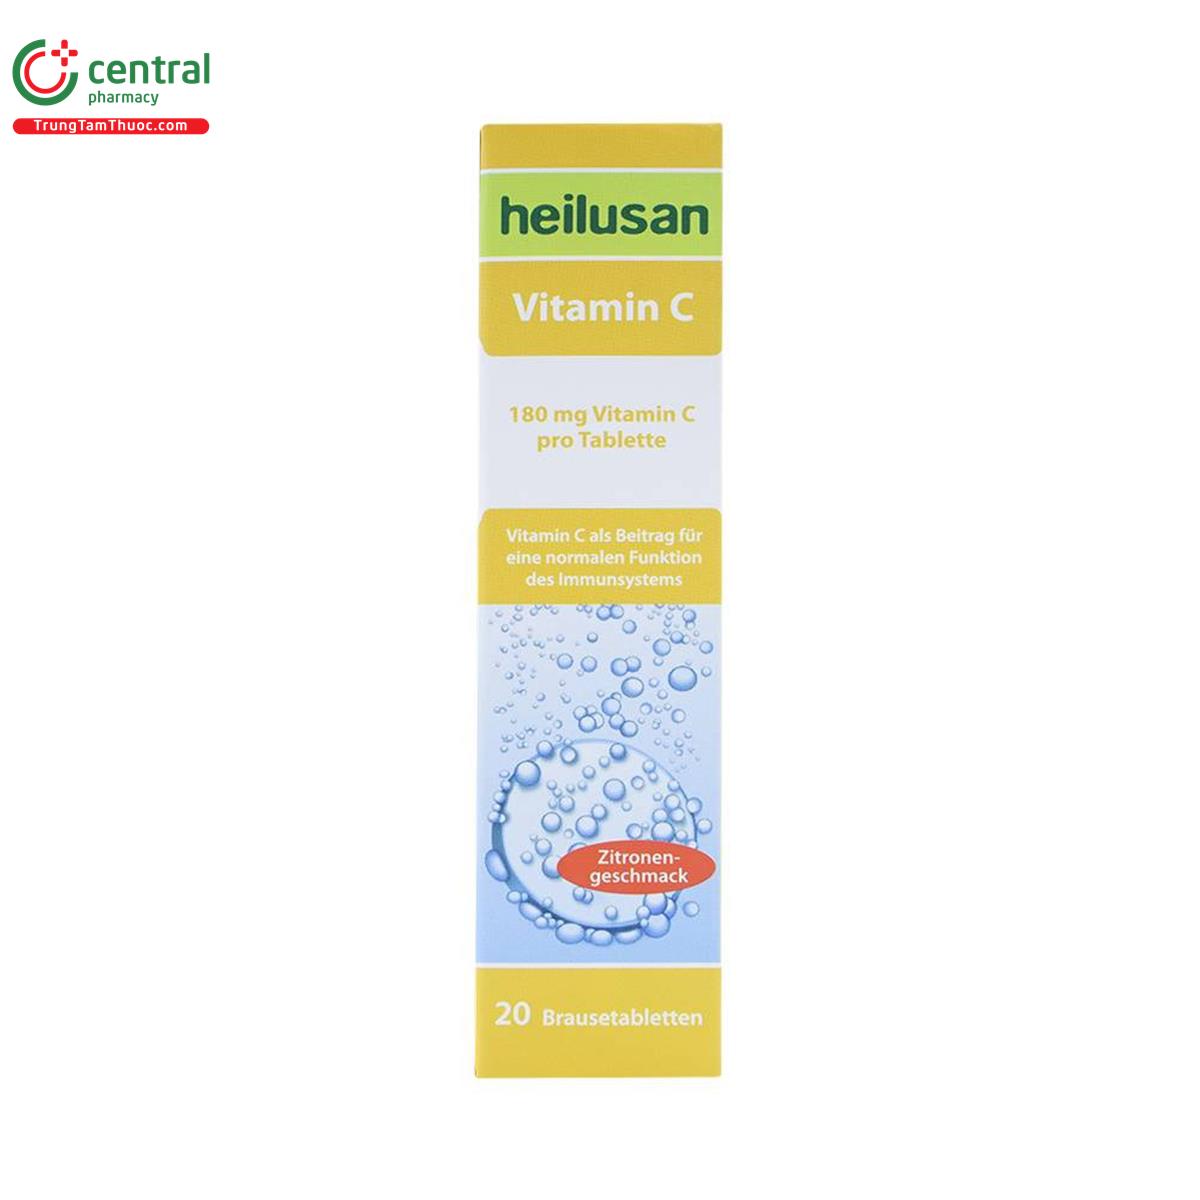 heilusan vitamin c 6 B0720